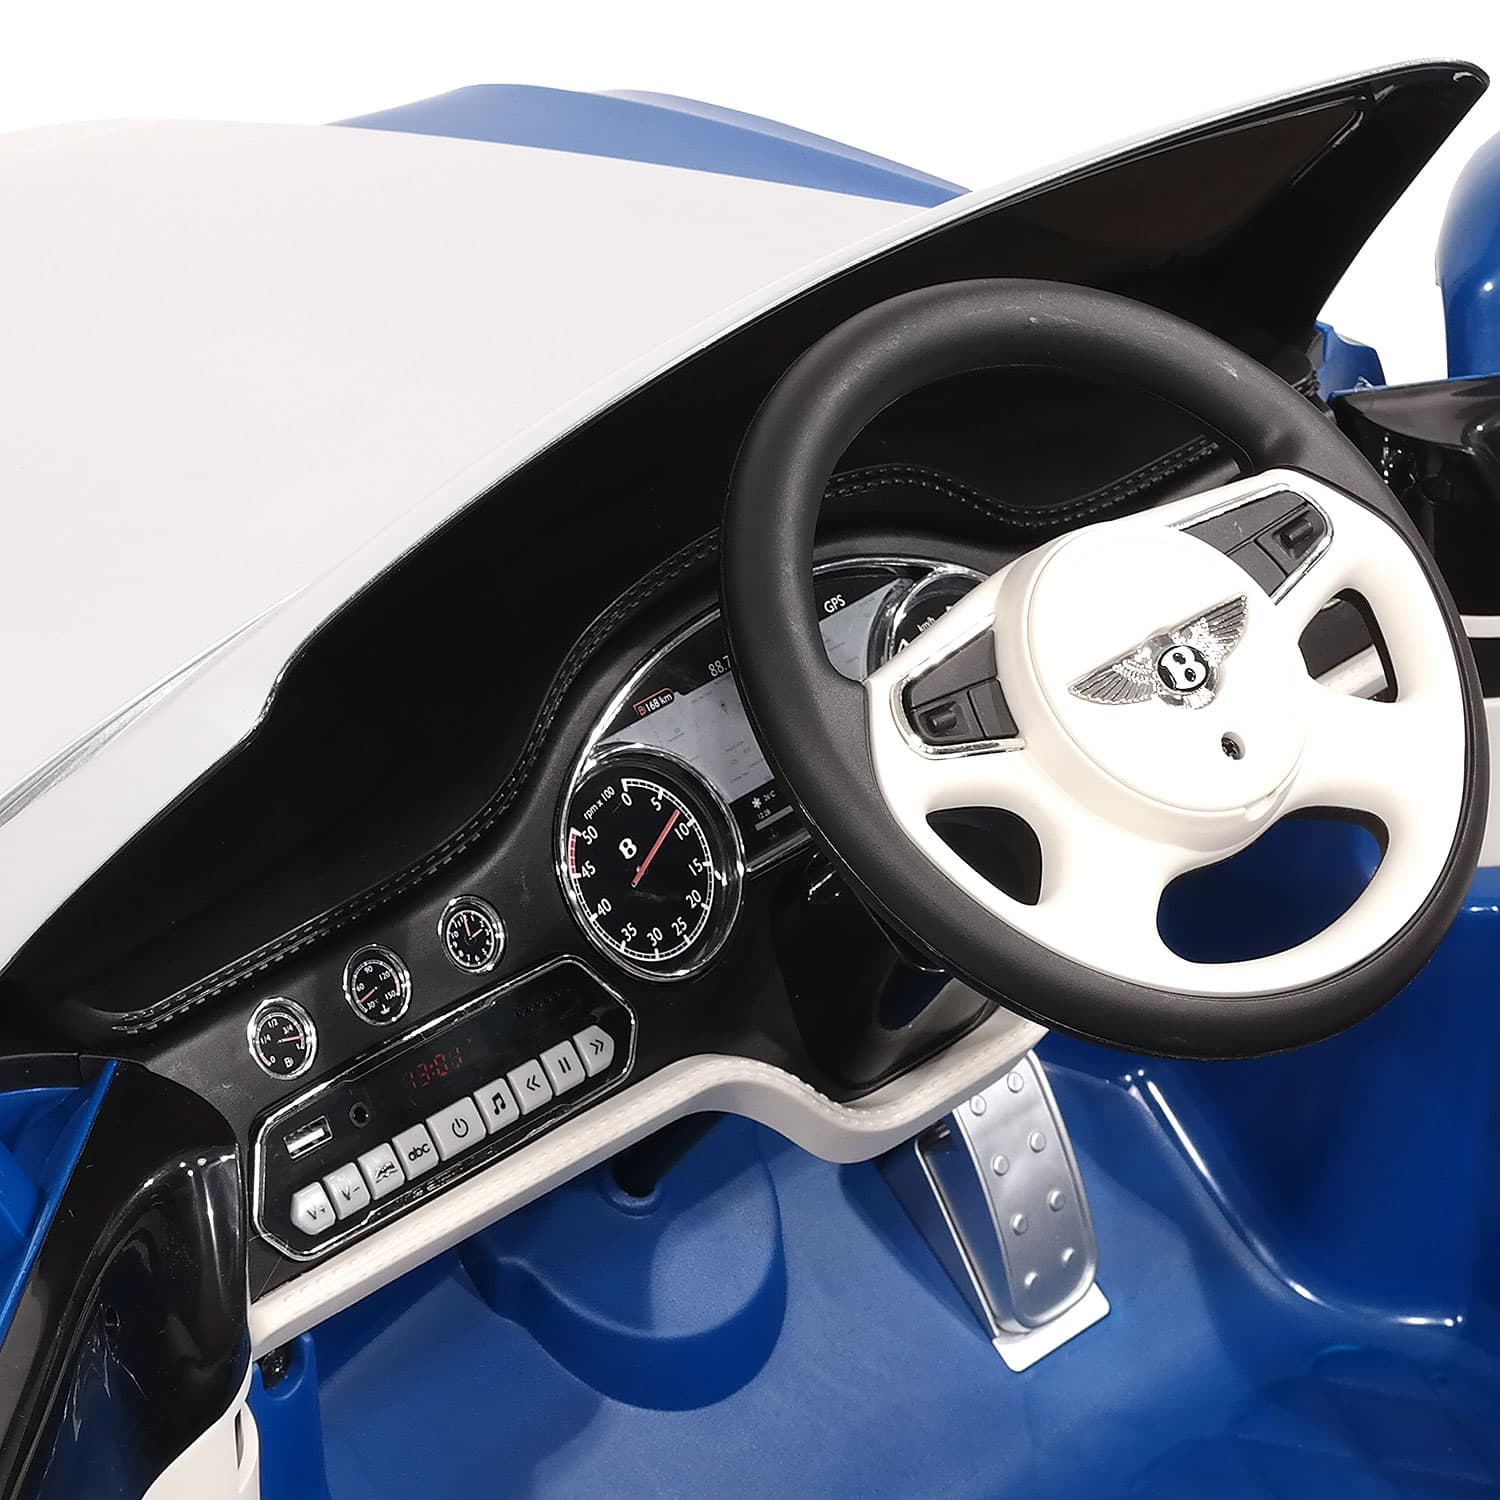 Bentley Mulsanne 12v Kids Ride On Car With Parental Remote Control | Blue